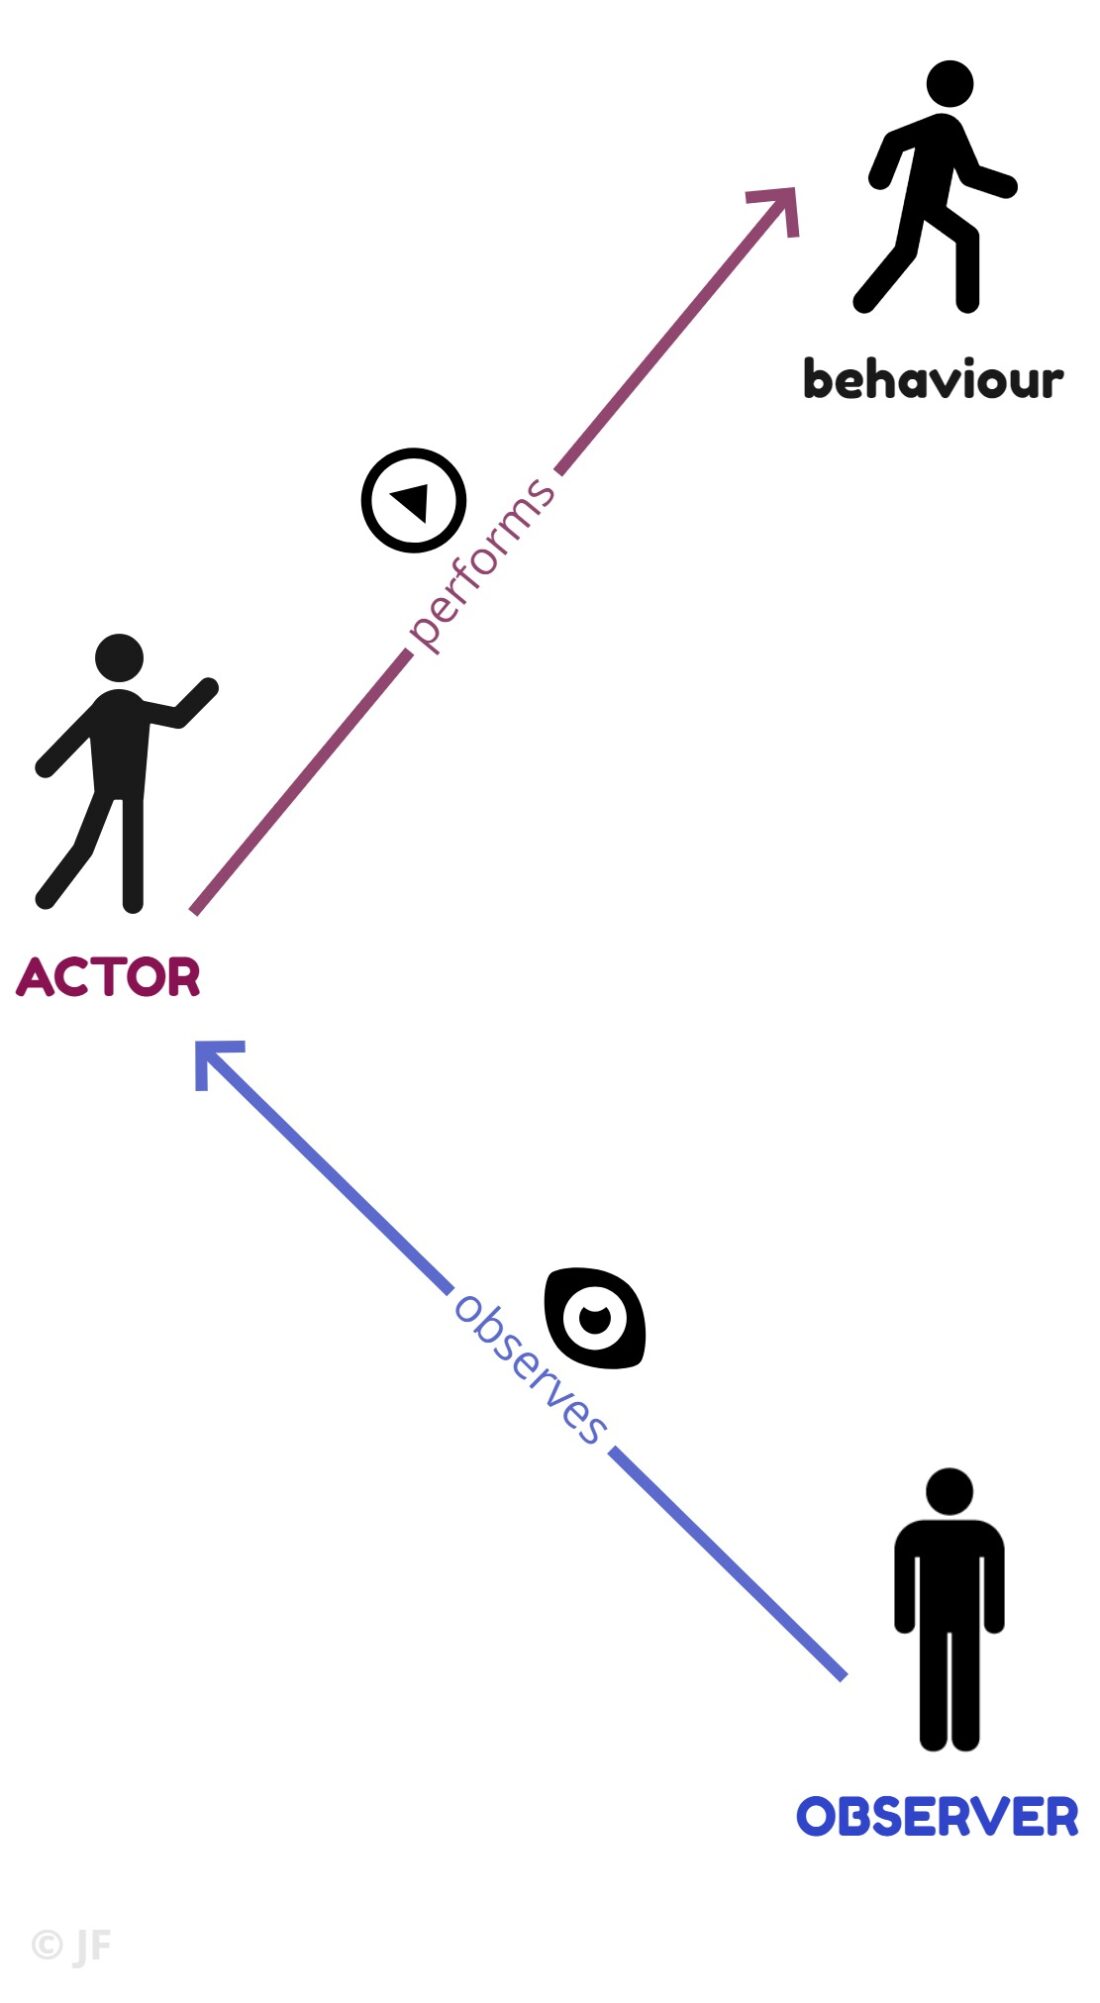 actor observer bias fundamental attribution error